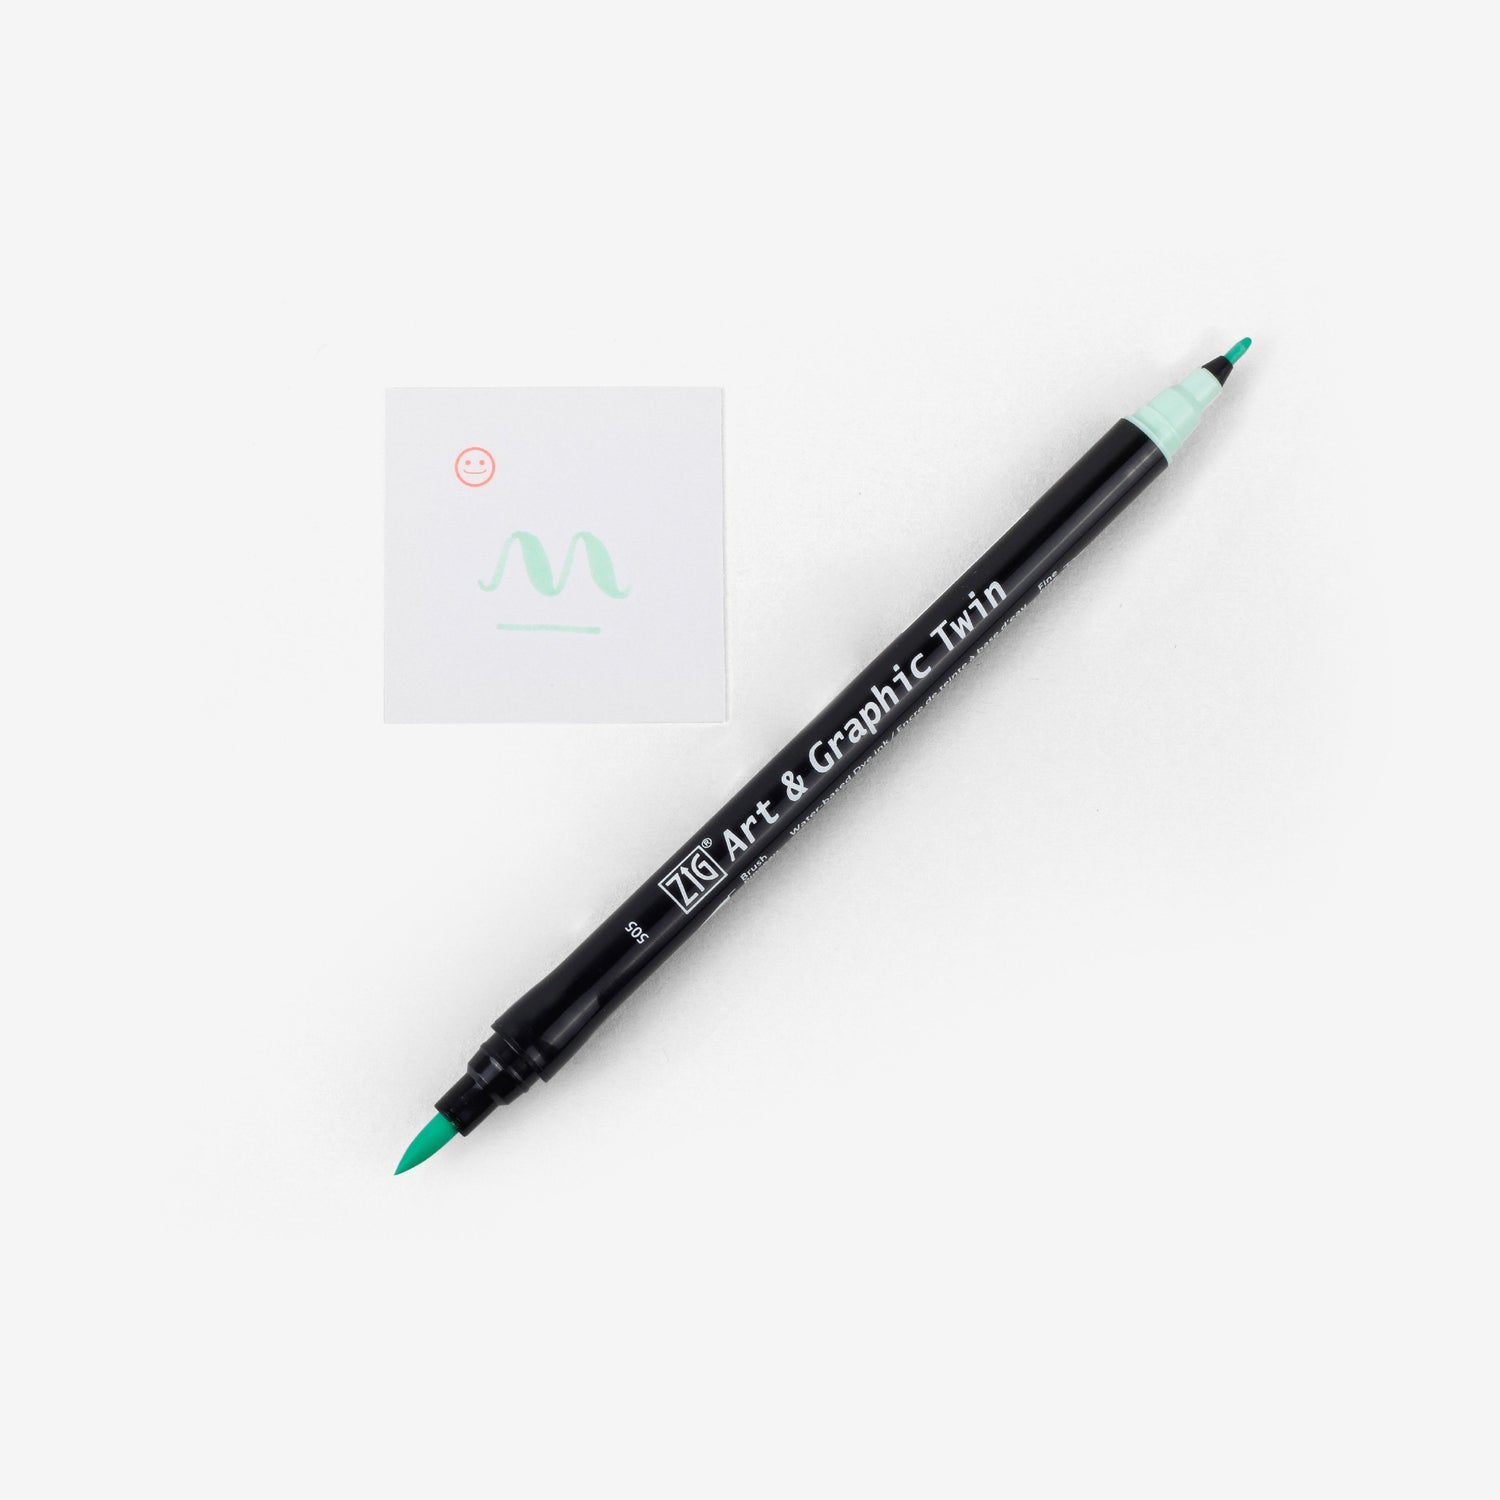 Kuretake Art & Graphic Twin Pen - Green Shadow